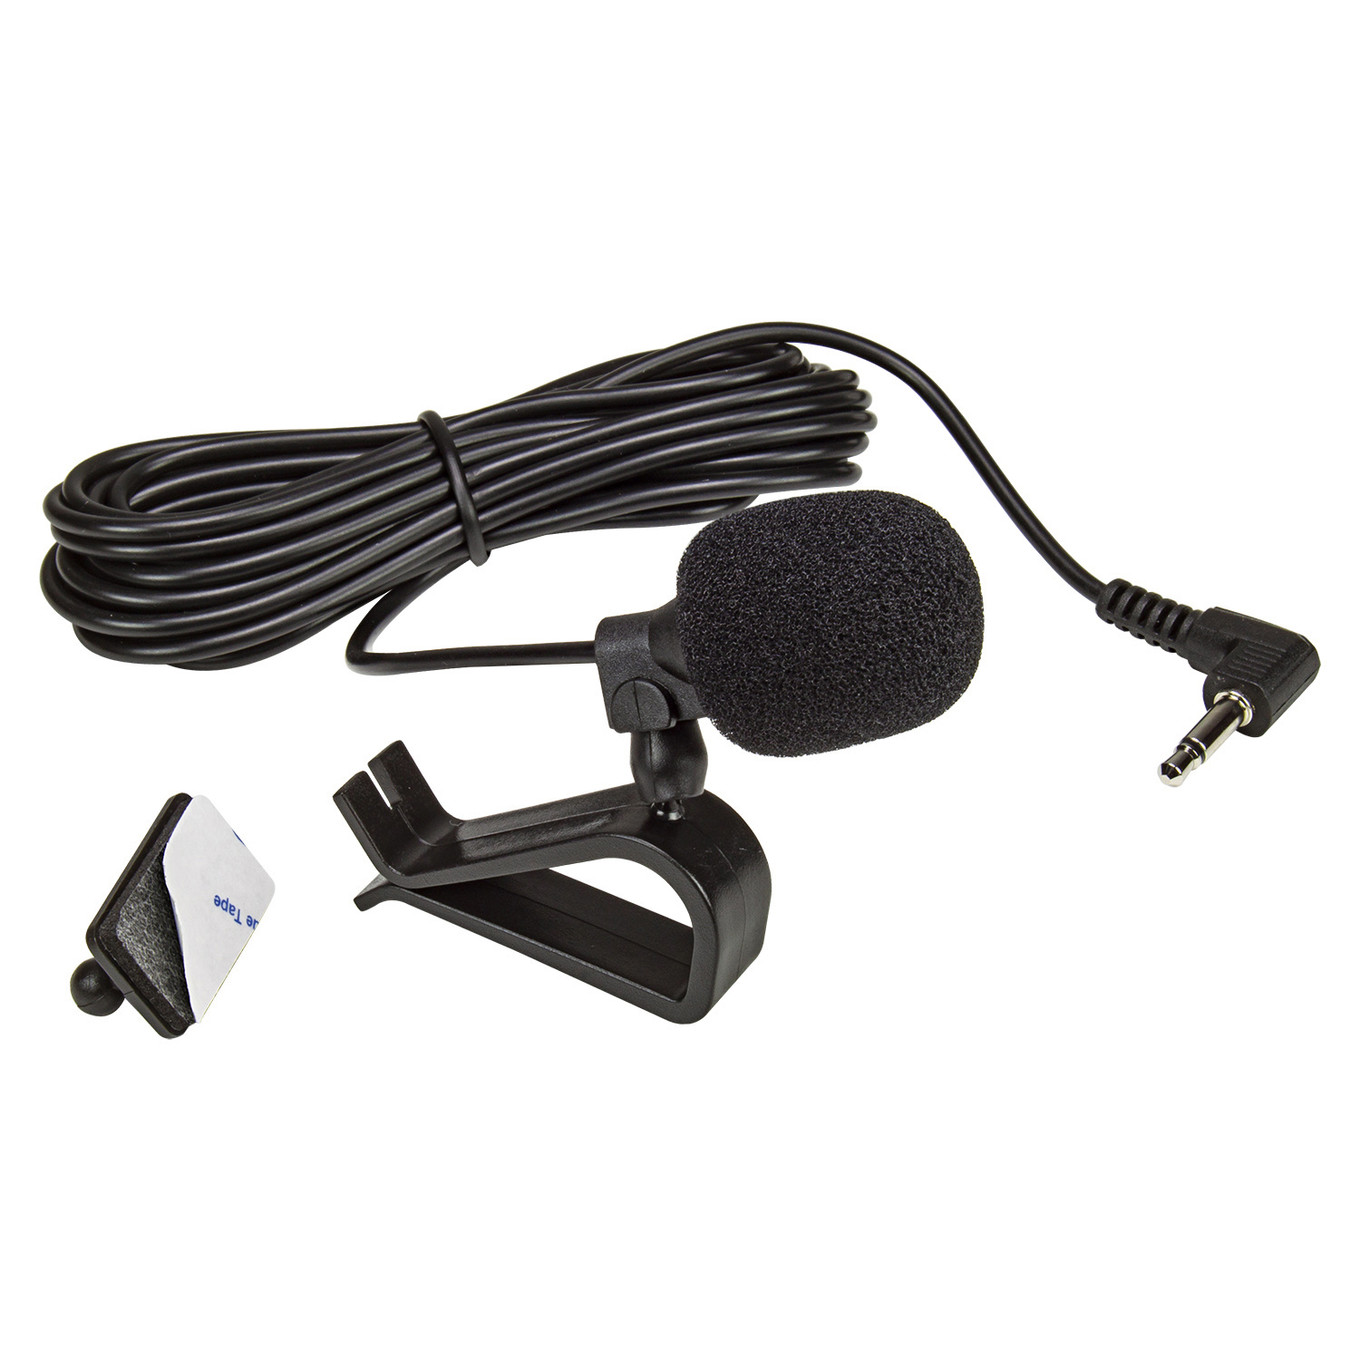 Mikrofon kompatibel mit Alpine Pioneer Clarion Kenwood JVC Sony Tom-/bilder/big/5800-151_1.jpg